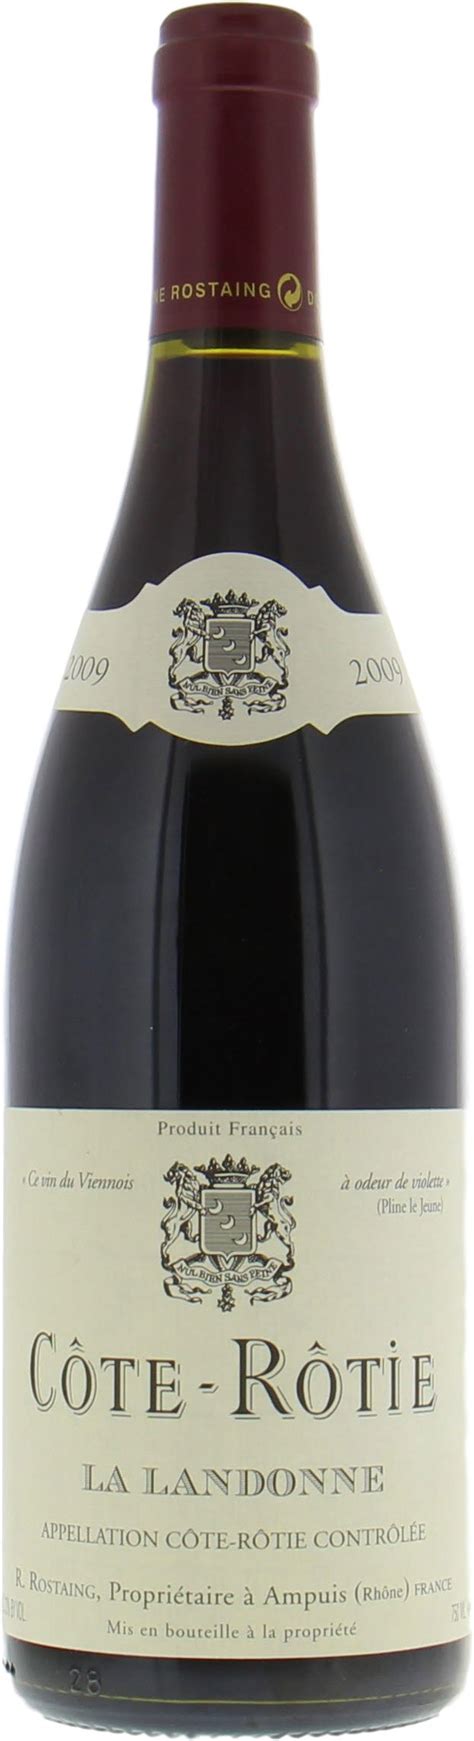 Cote Rotie La Landonne 2009 Rostaing Buy Online Best Of Wines